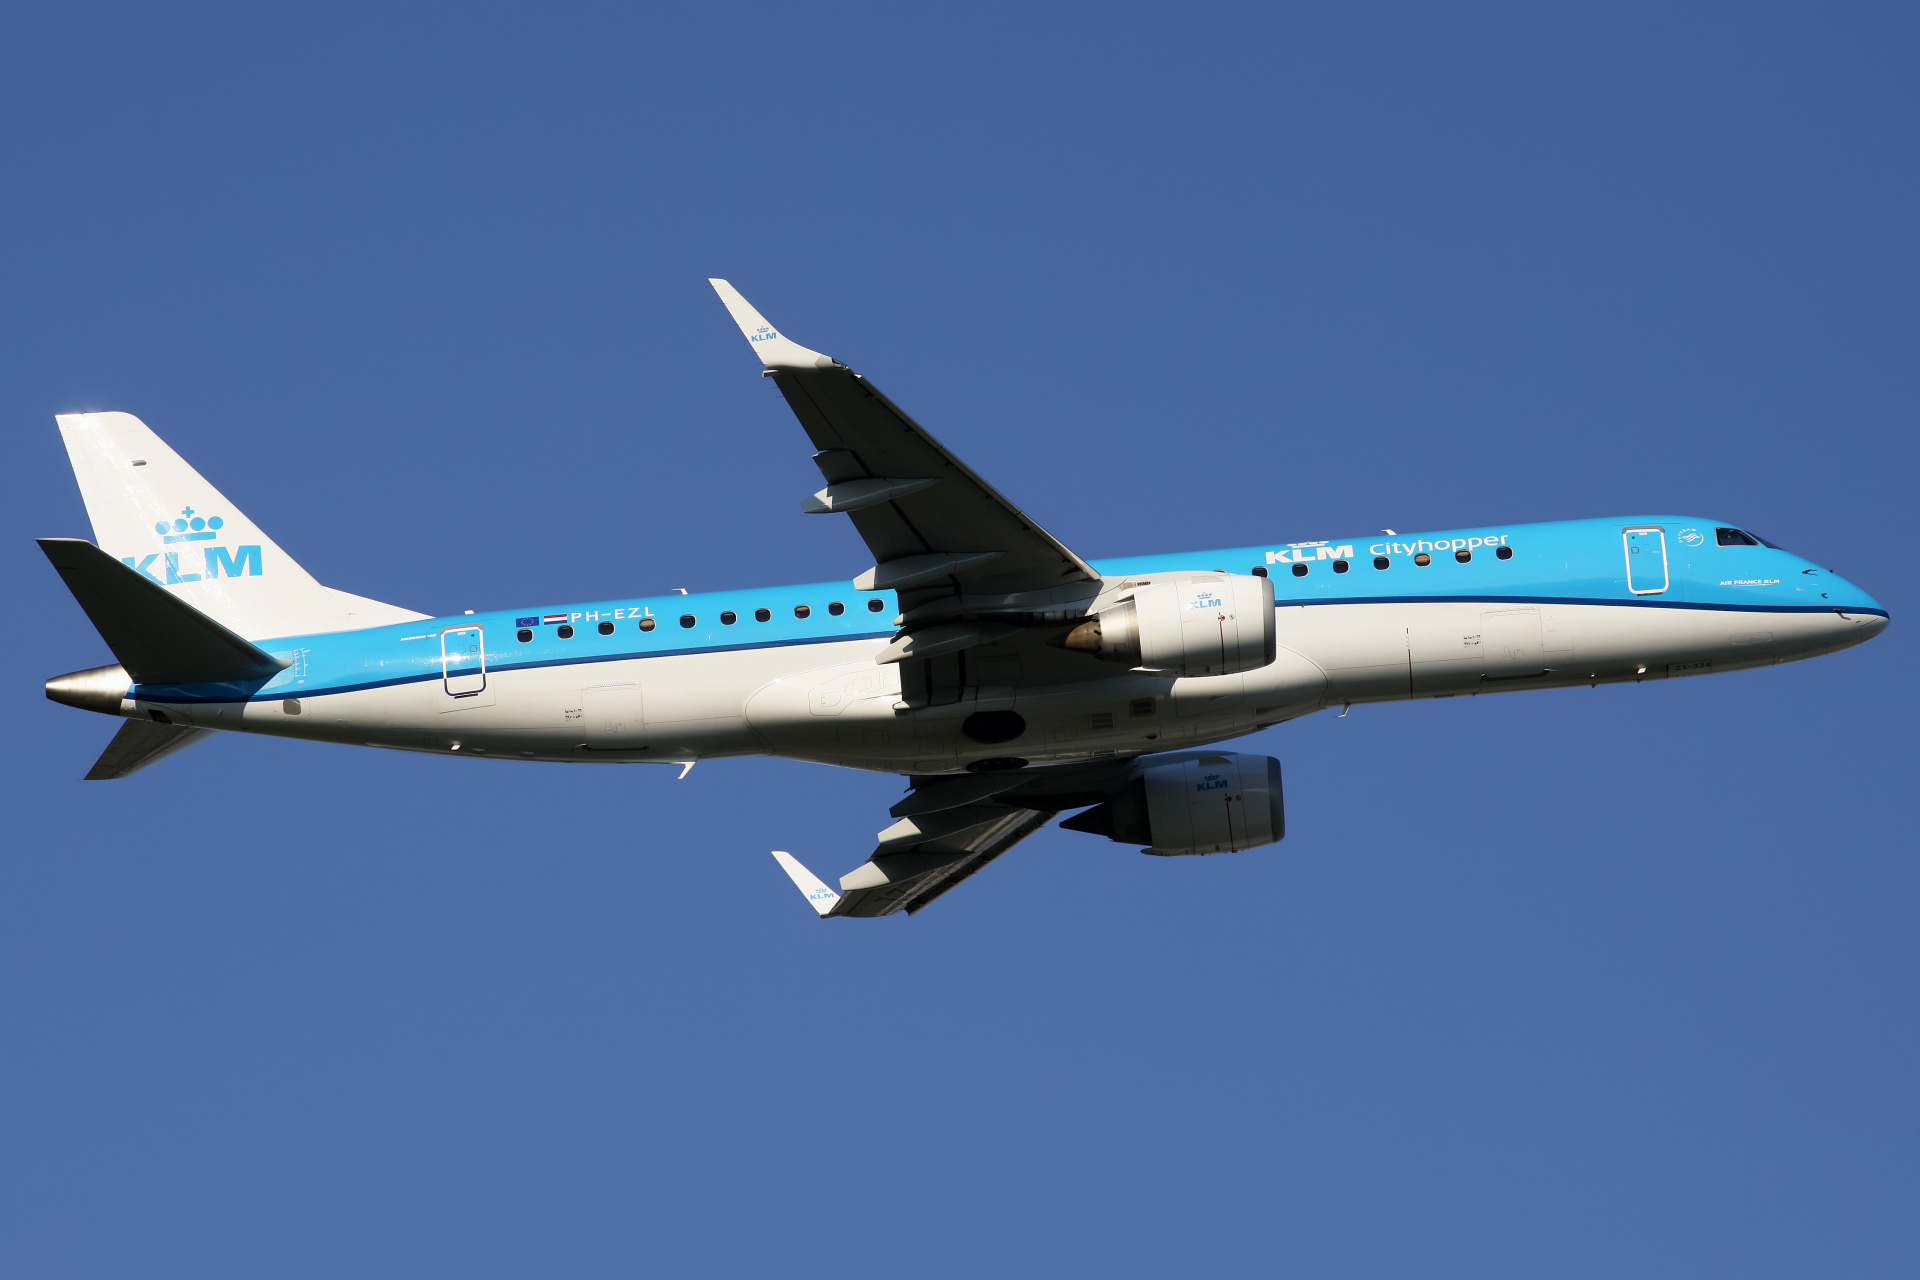 PH-EZL (new livery) (Aircraft » EPWA Spotting » Embraer E190 » KLM Cityhopper)